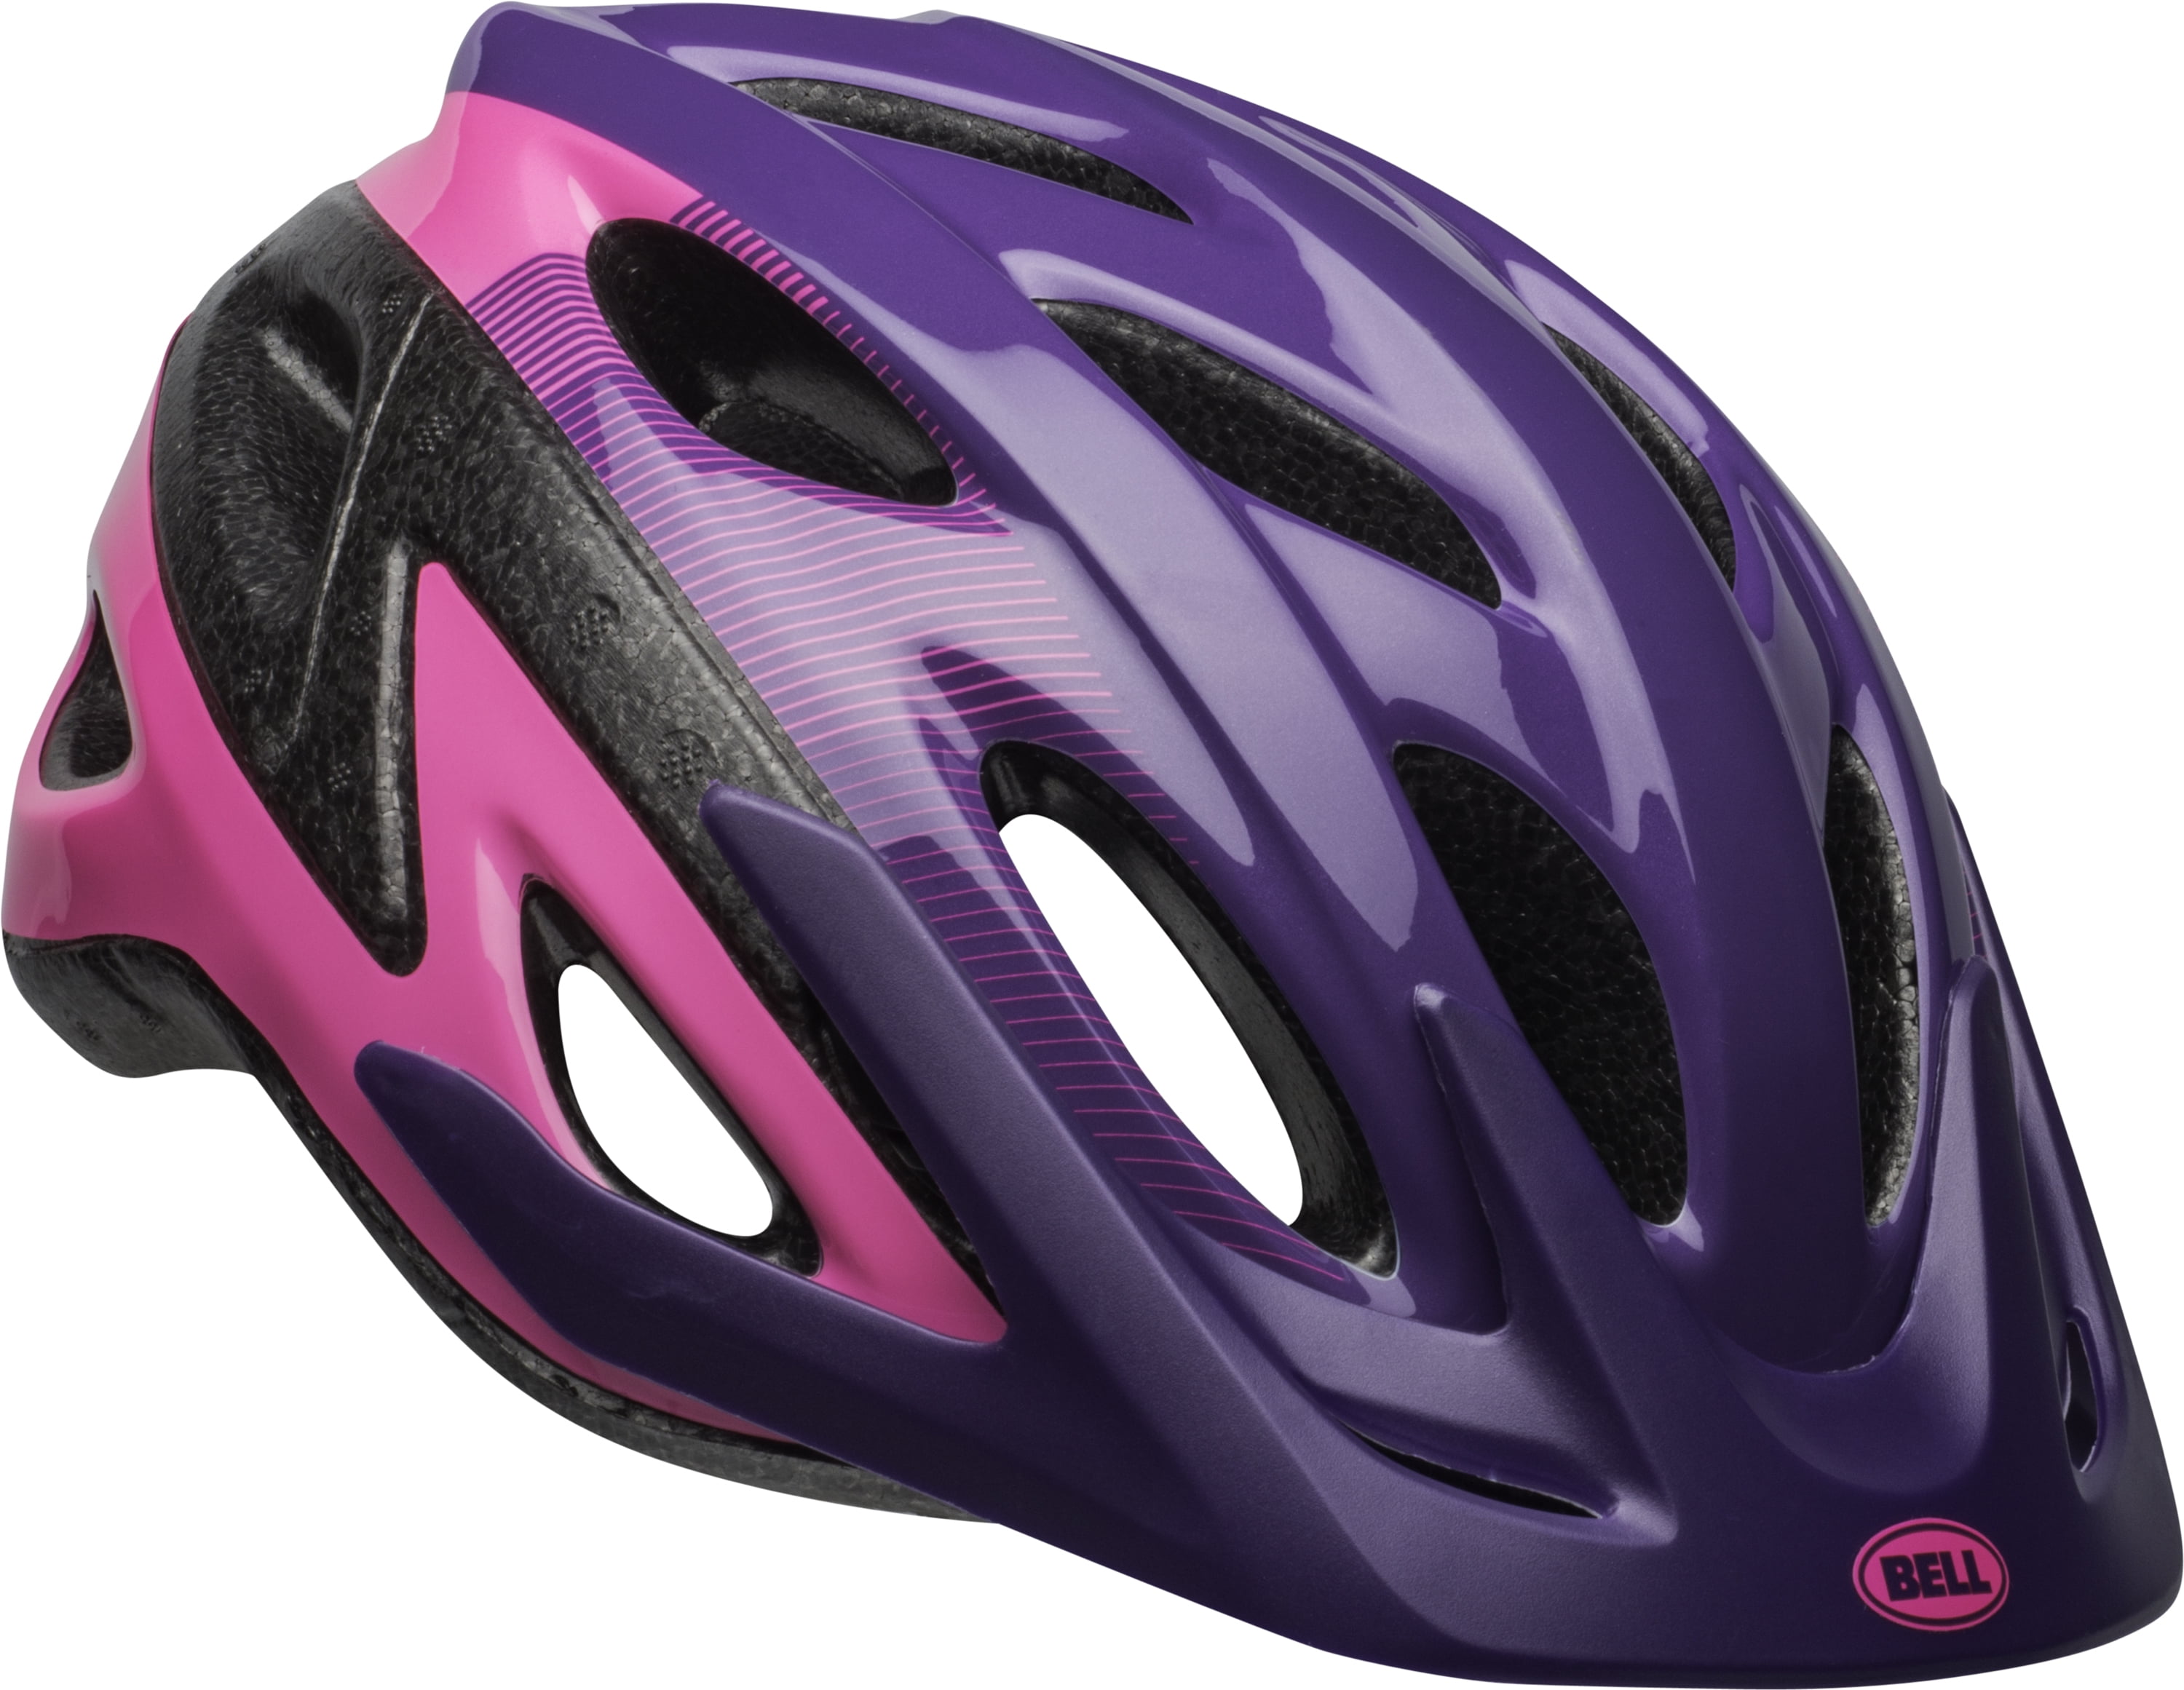 Multi-Sport Helmet Size Adjustable for Boys and Girls TurboSke Toddler Kids Bike Helmet 